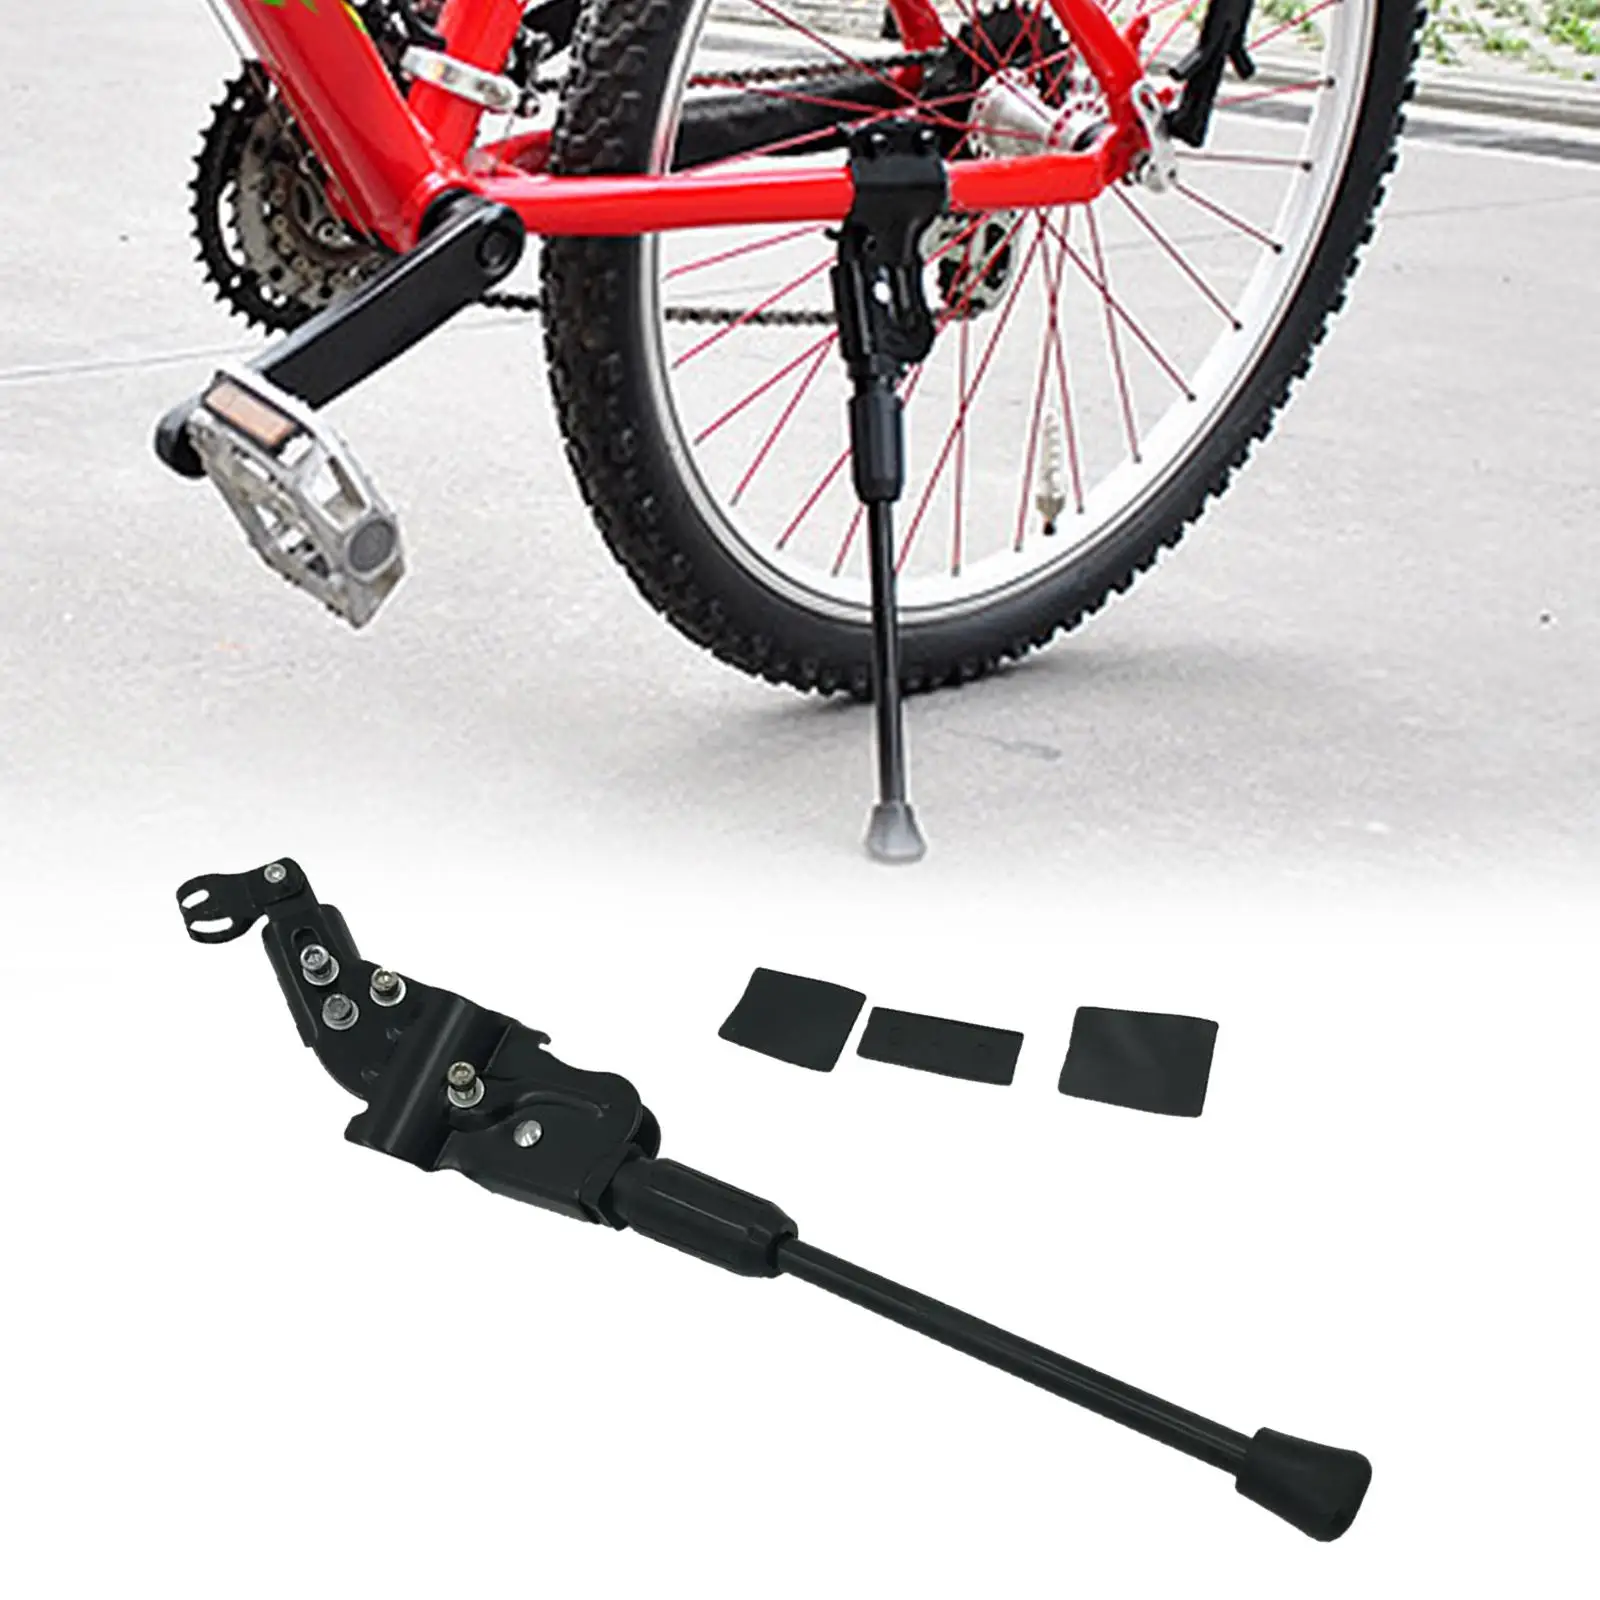 Bike Kickstand Single Side Bicycle Stand for 26 inch Mountain Bike Wear Resisting Waterproof Anti Slip Parking Stand Rear Mount